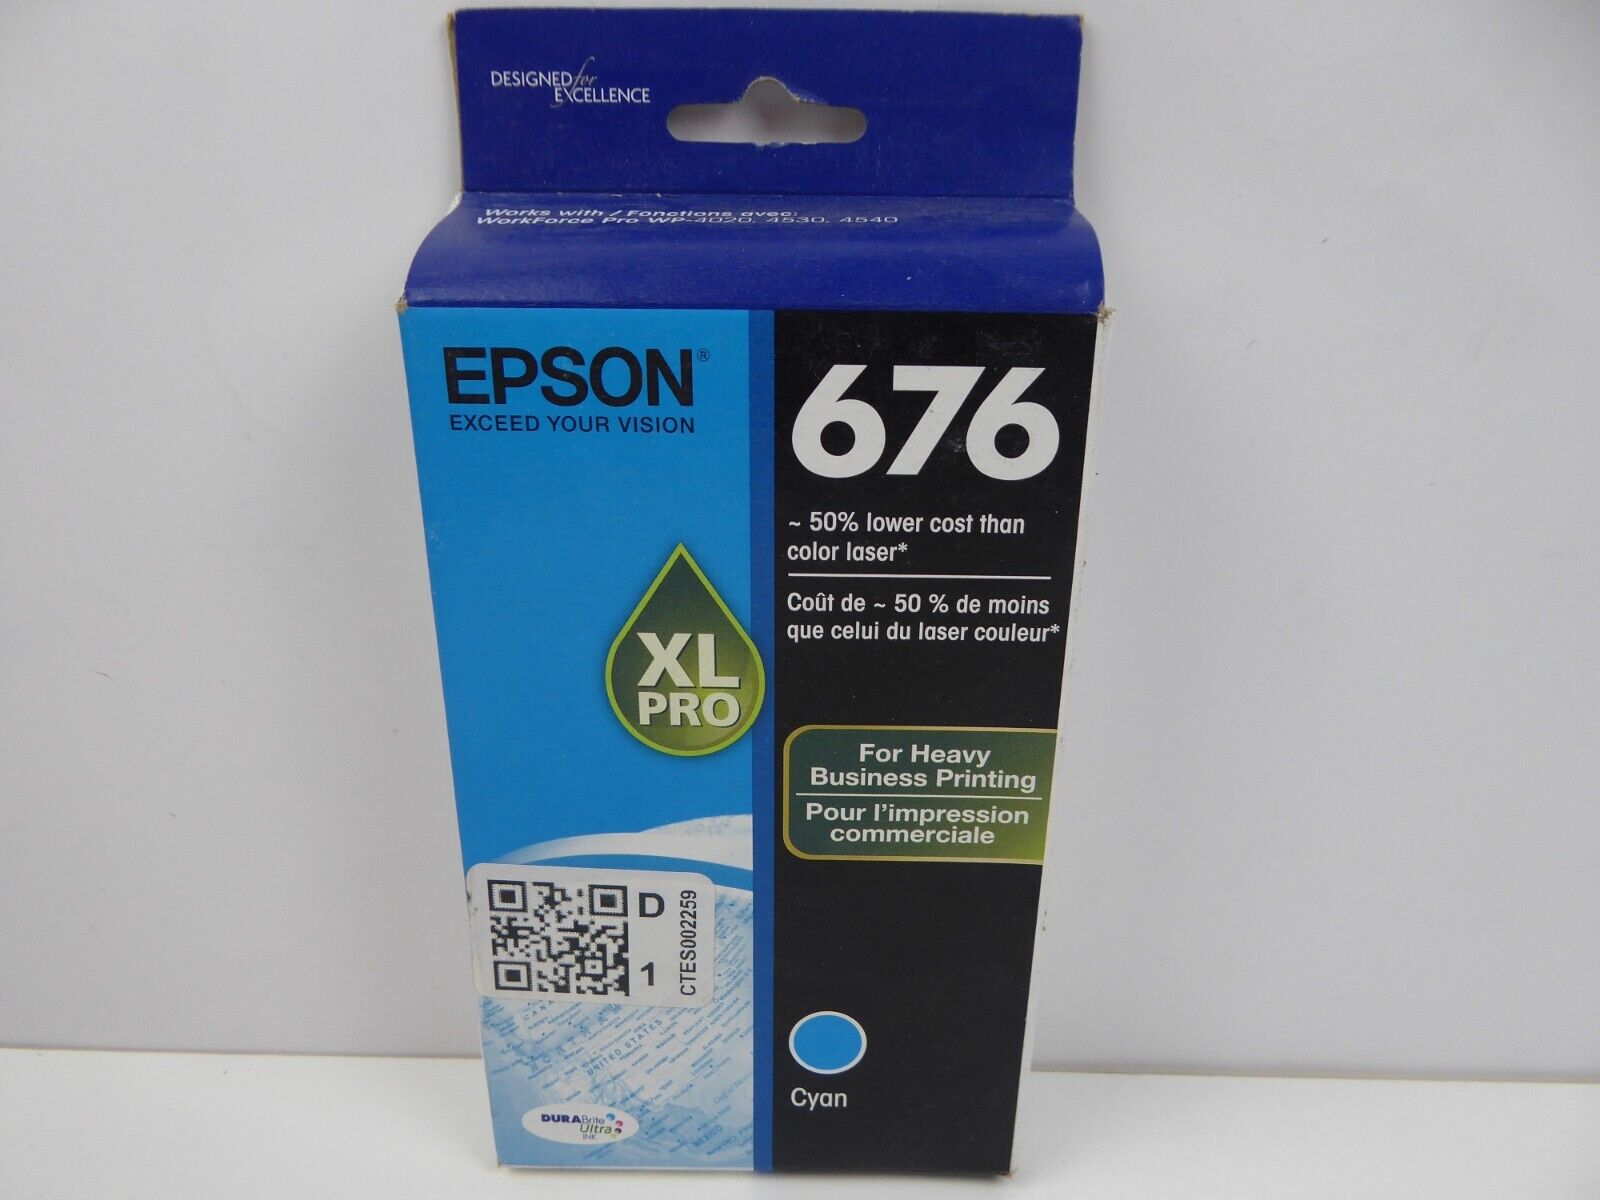 Epson 676XL Pro Cyan Ink Cartridge T676XL220 Expired 02/2019 New Sealed